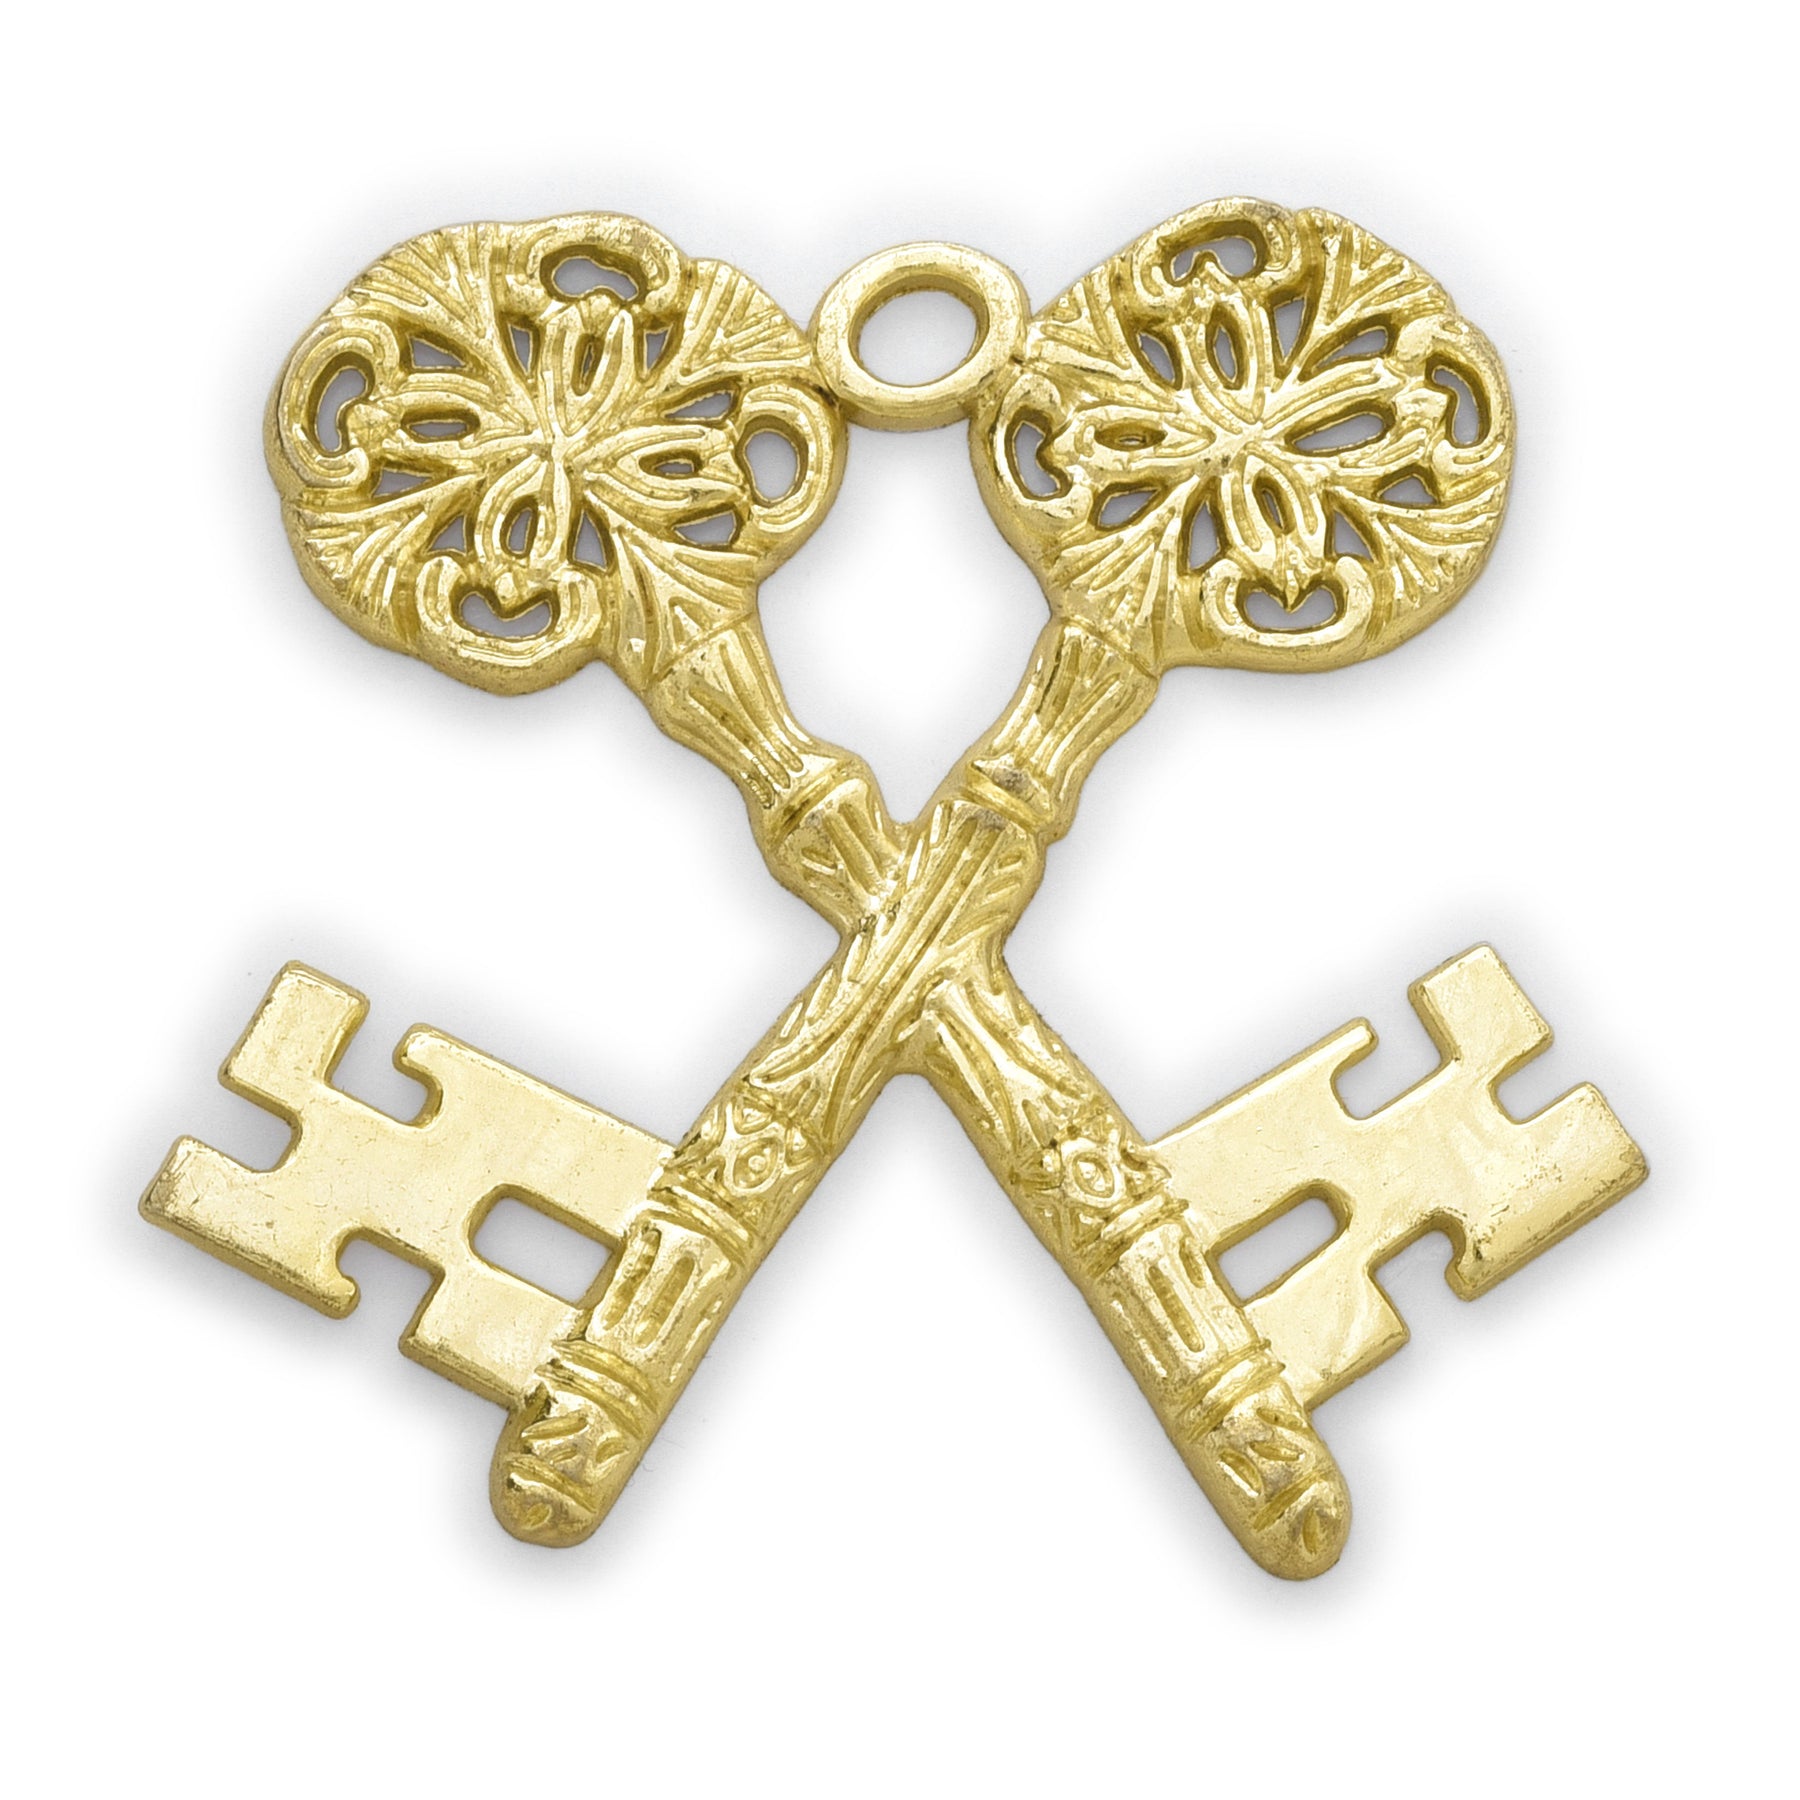 Treasurer Blue Lodge Officer Collar Jewel - Gold Plated - Bricks Masons